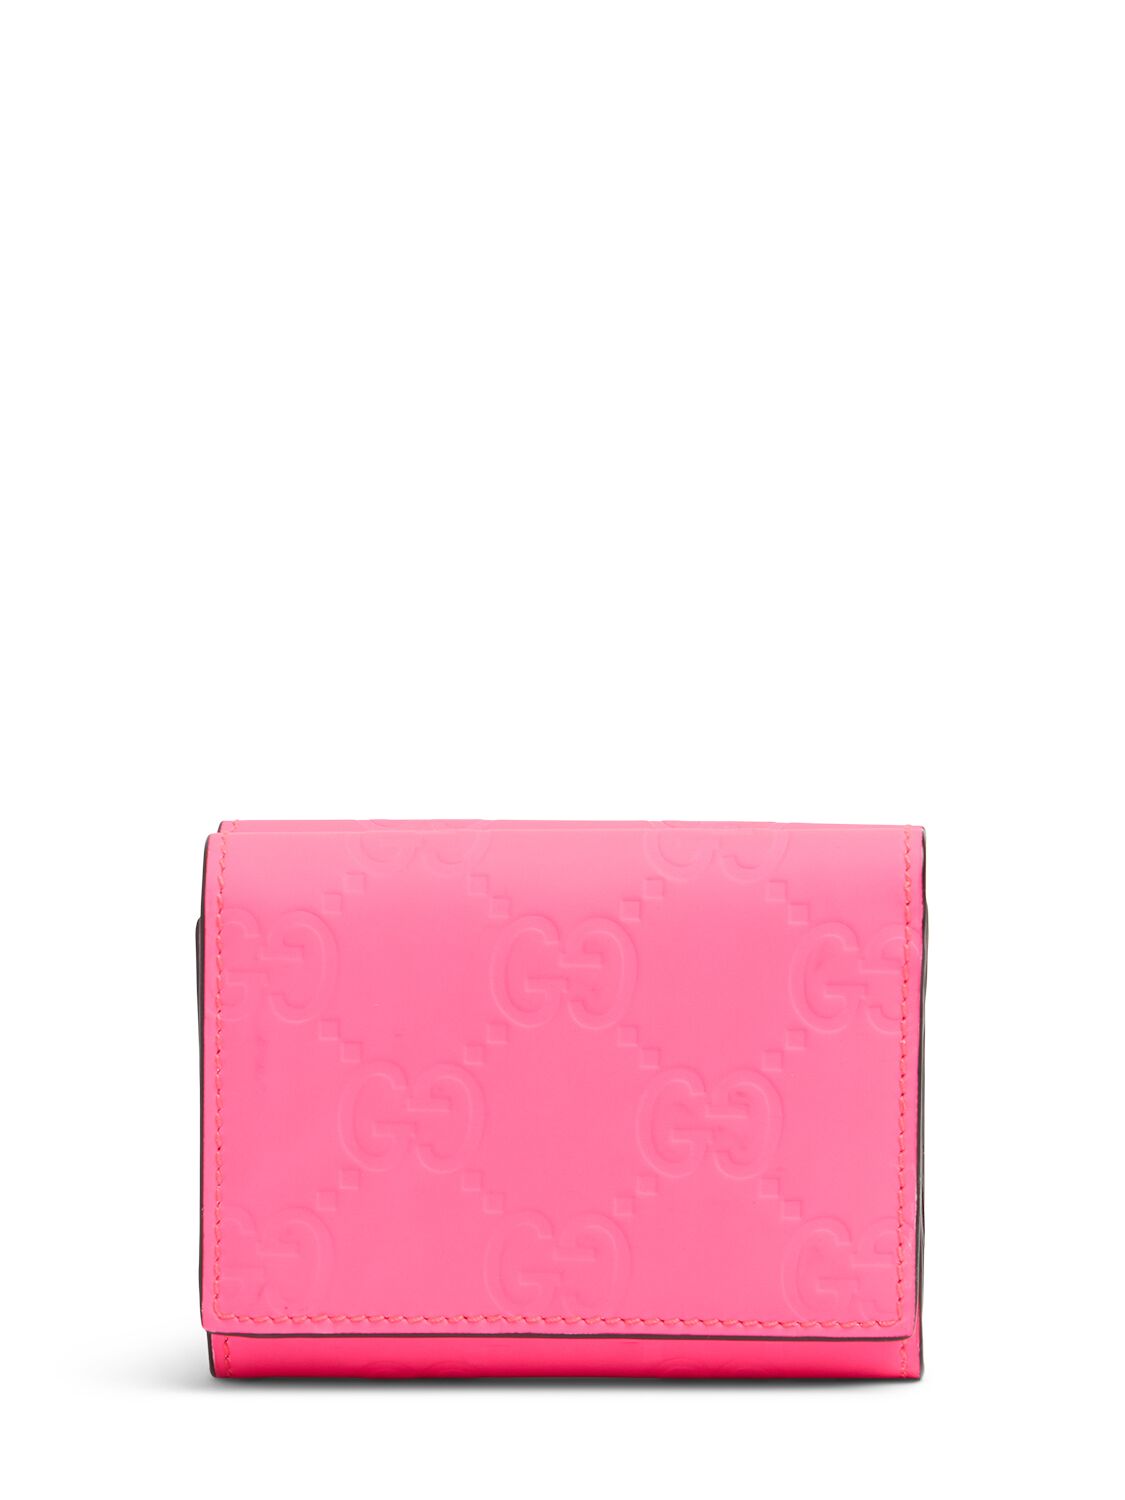 Gucci Rubberized Leather Gg Wallet In Neon Fuchsia